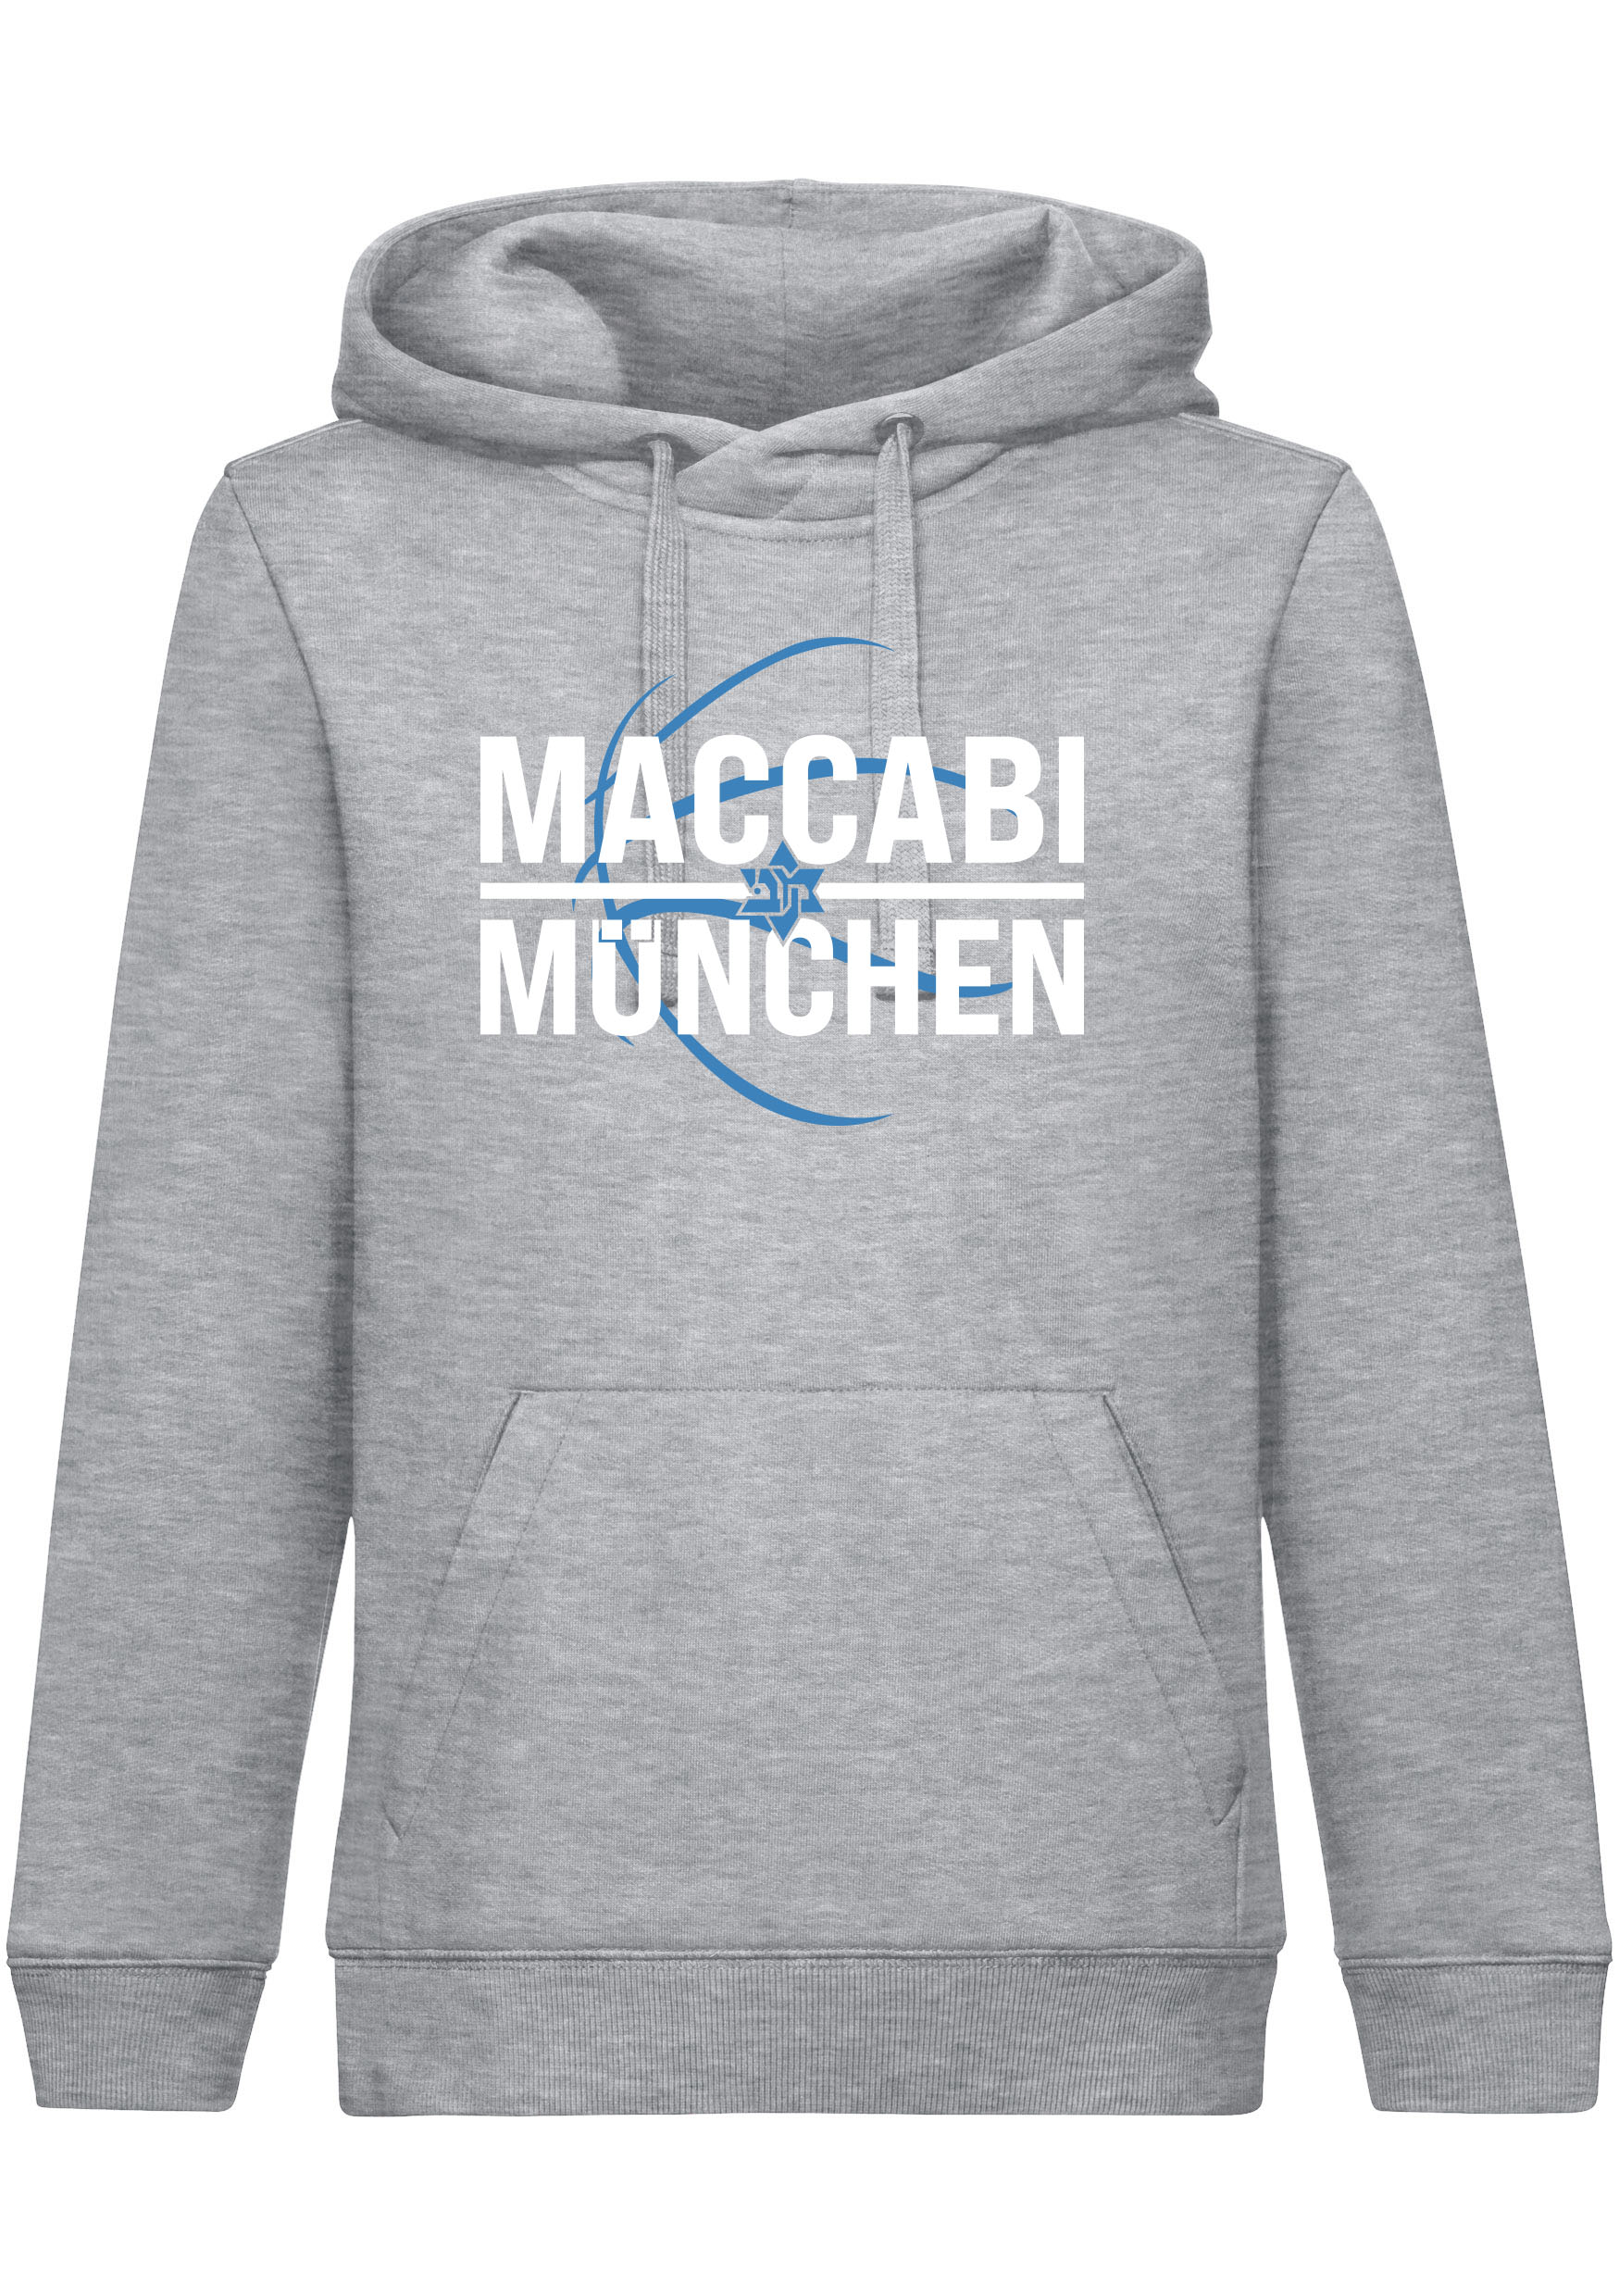 Maccabi München Hoodie